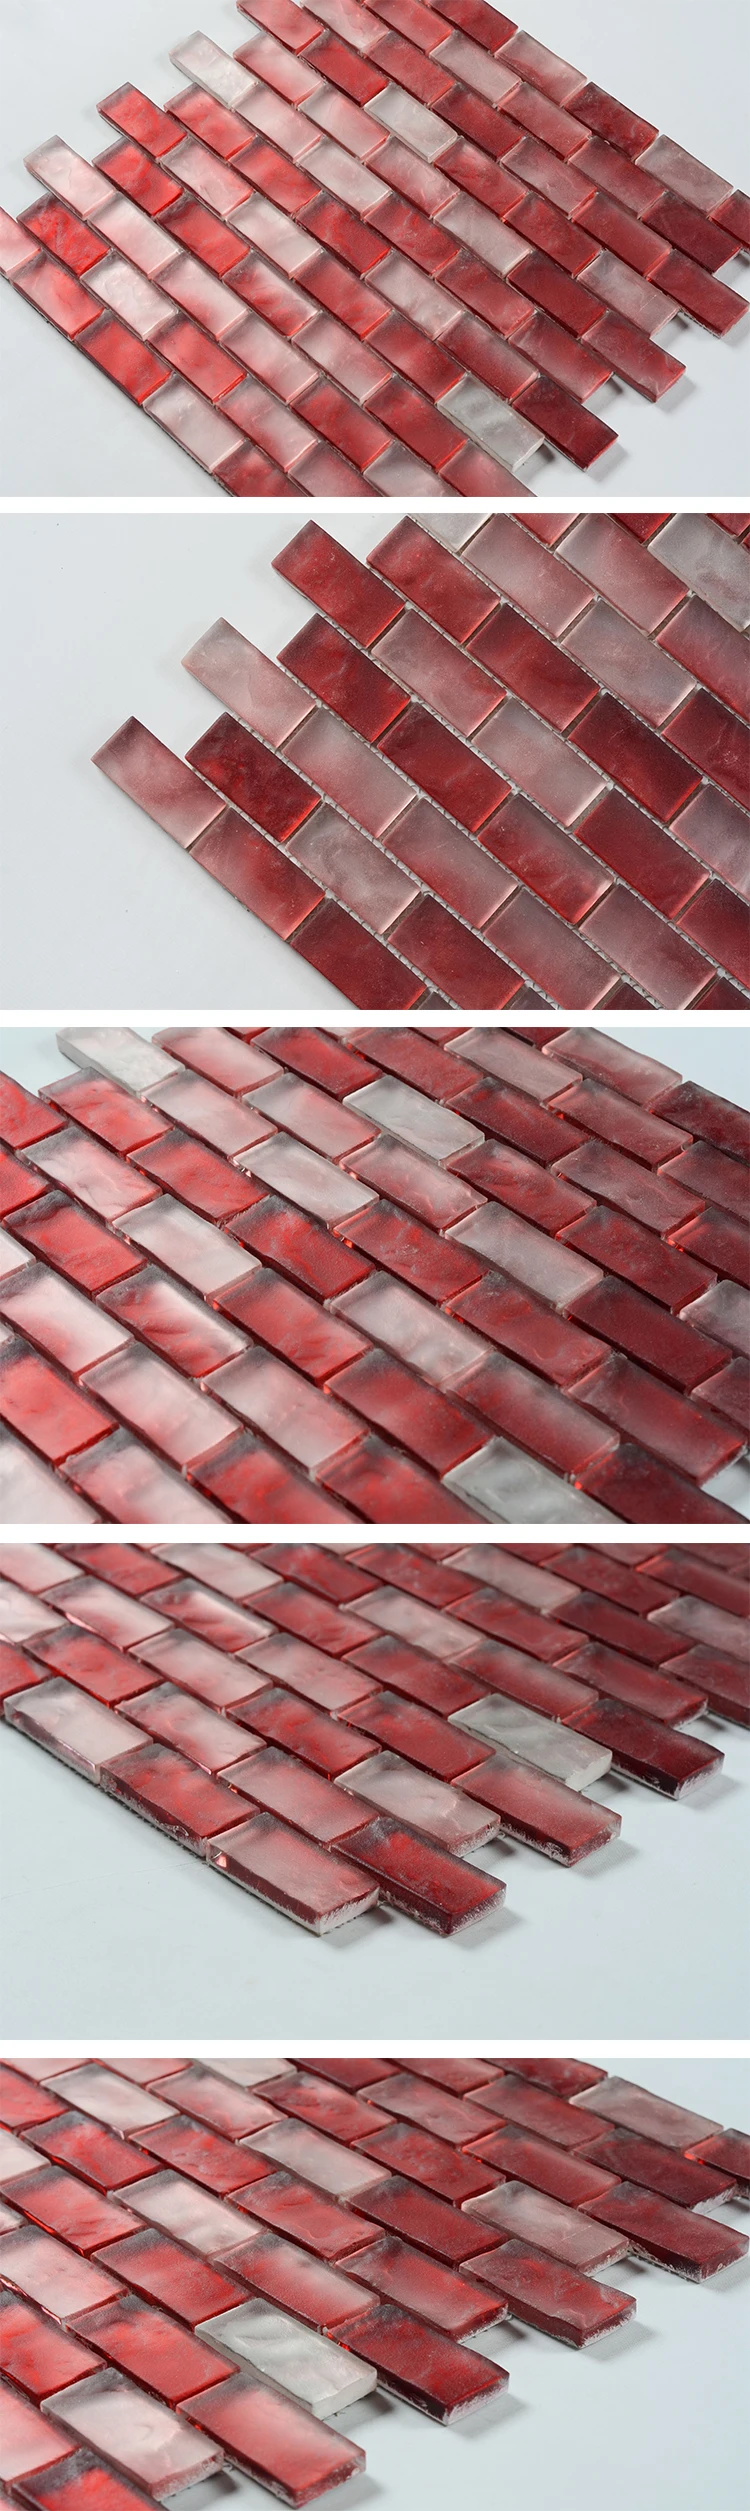 Red 10x20cm 4x8inch Kitchen Backsplash Ceramic Subway Tiles